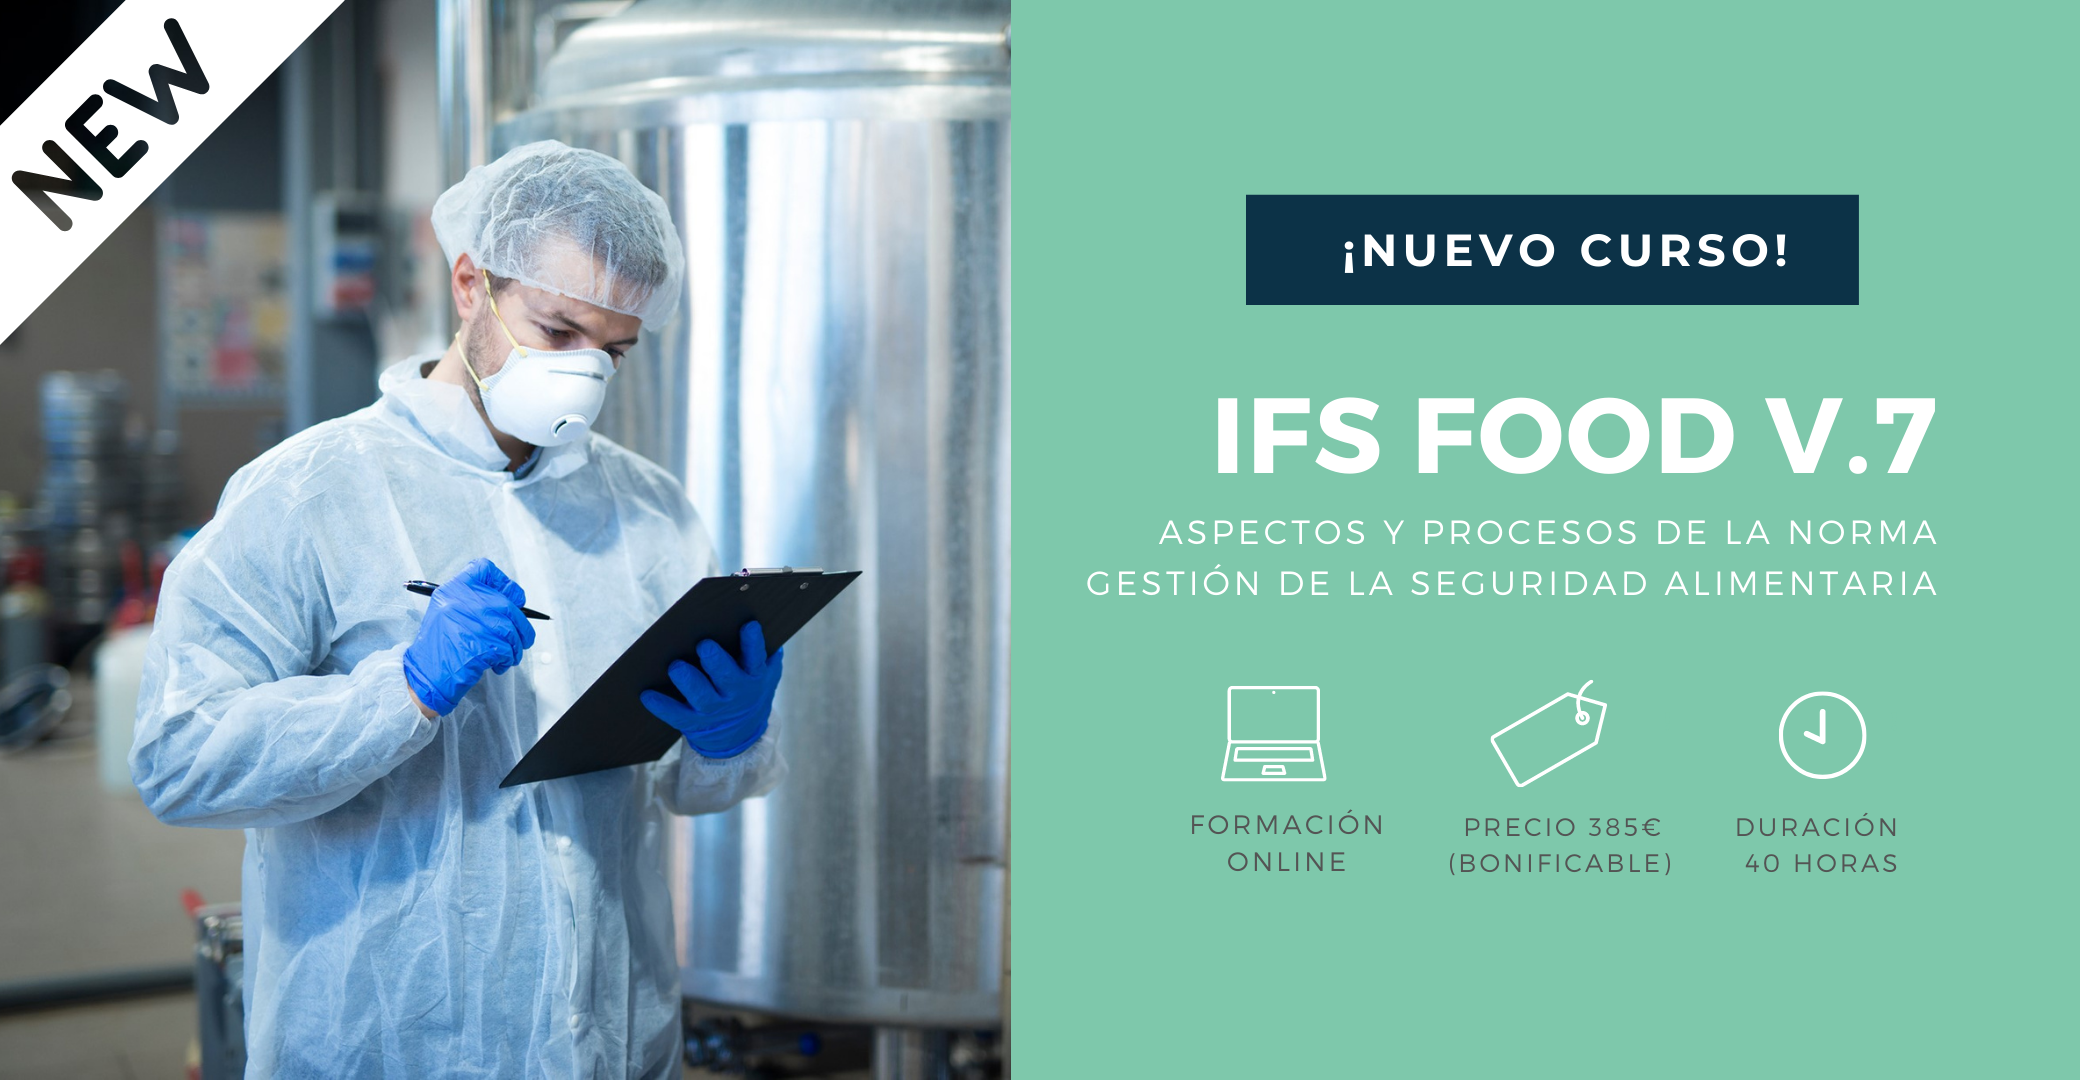 Curso IFS Food v7 inocuidad alimentaria Segal seguridad alimentaria 